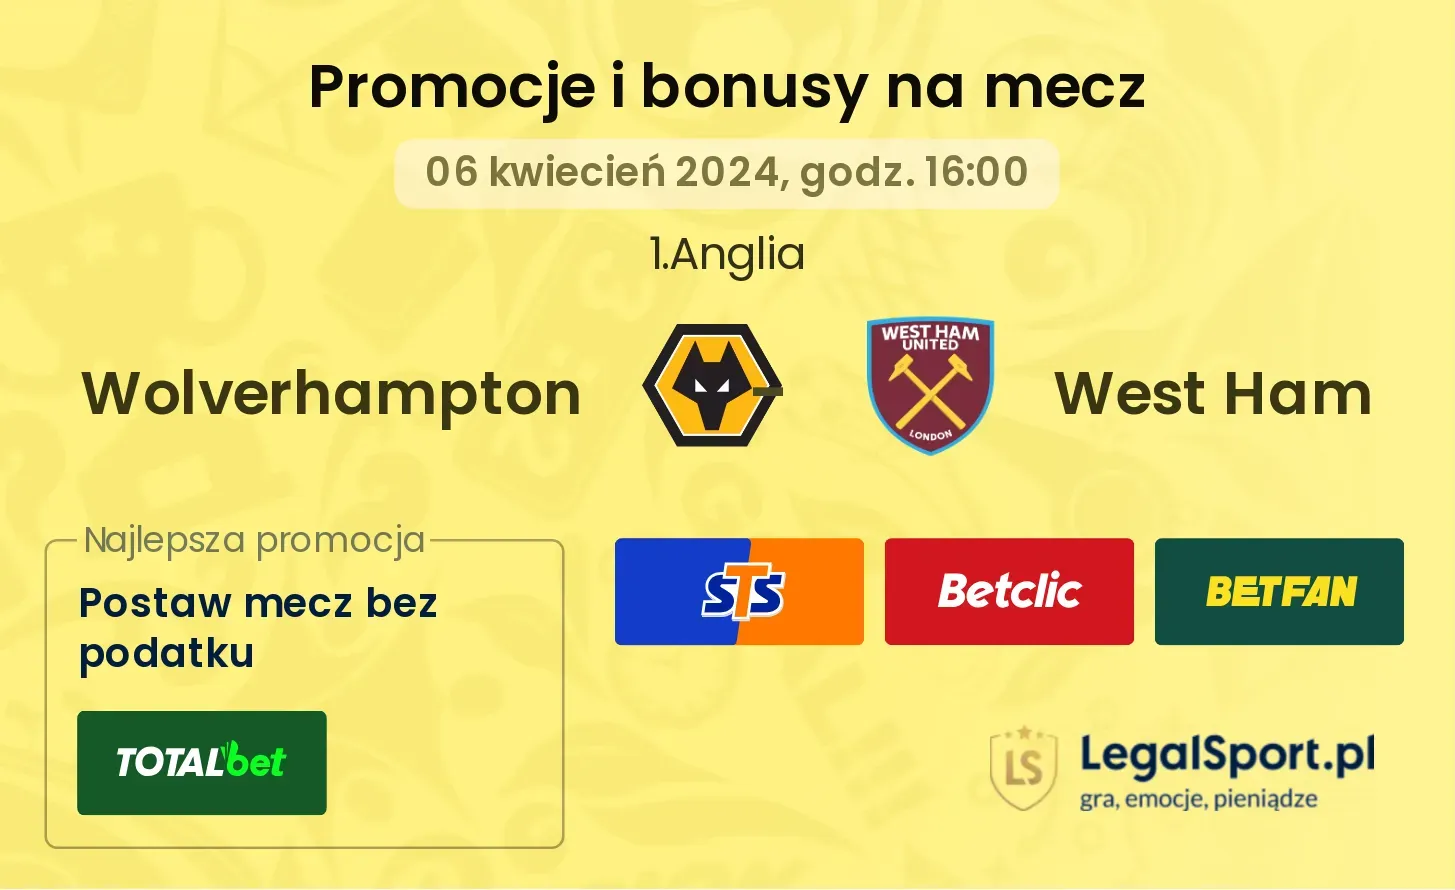 Wolverhampton - West Ham promocje bonusy na mecz